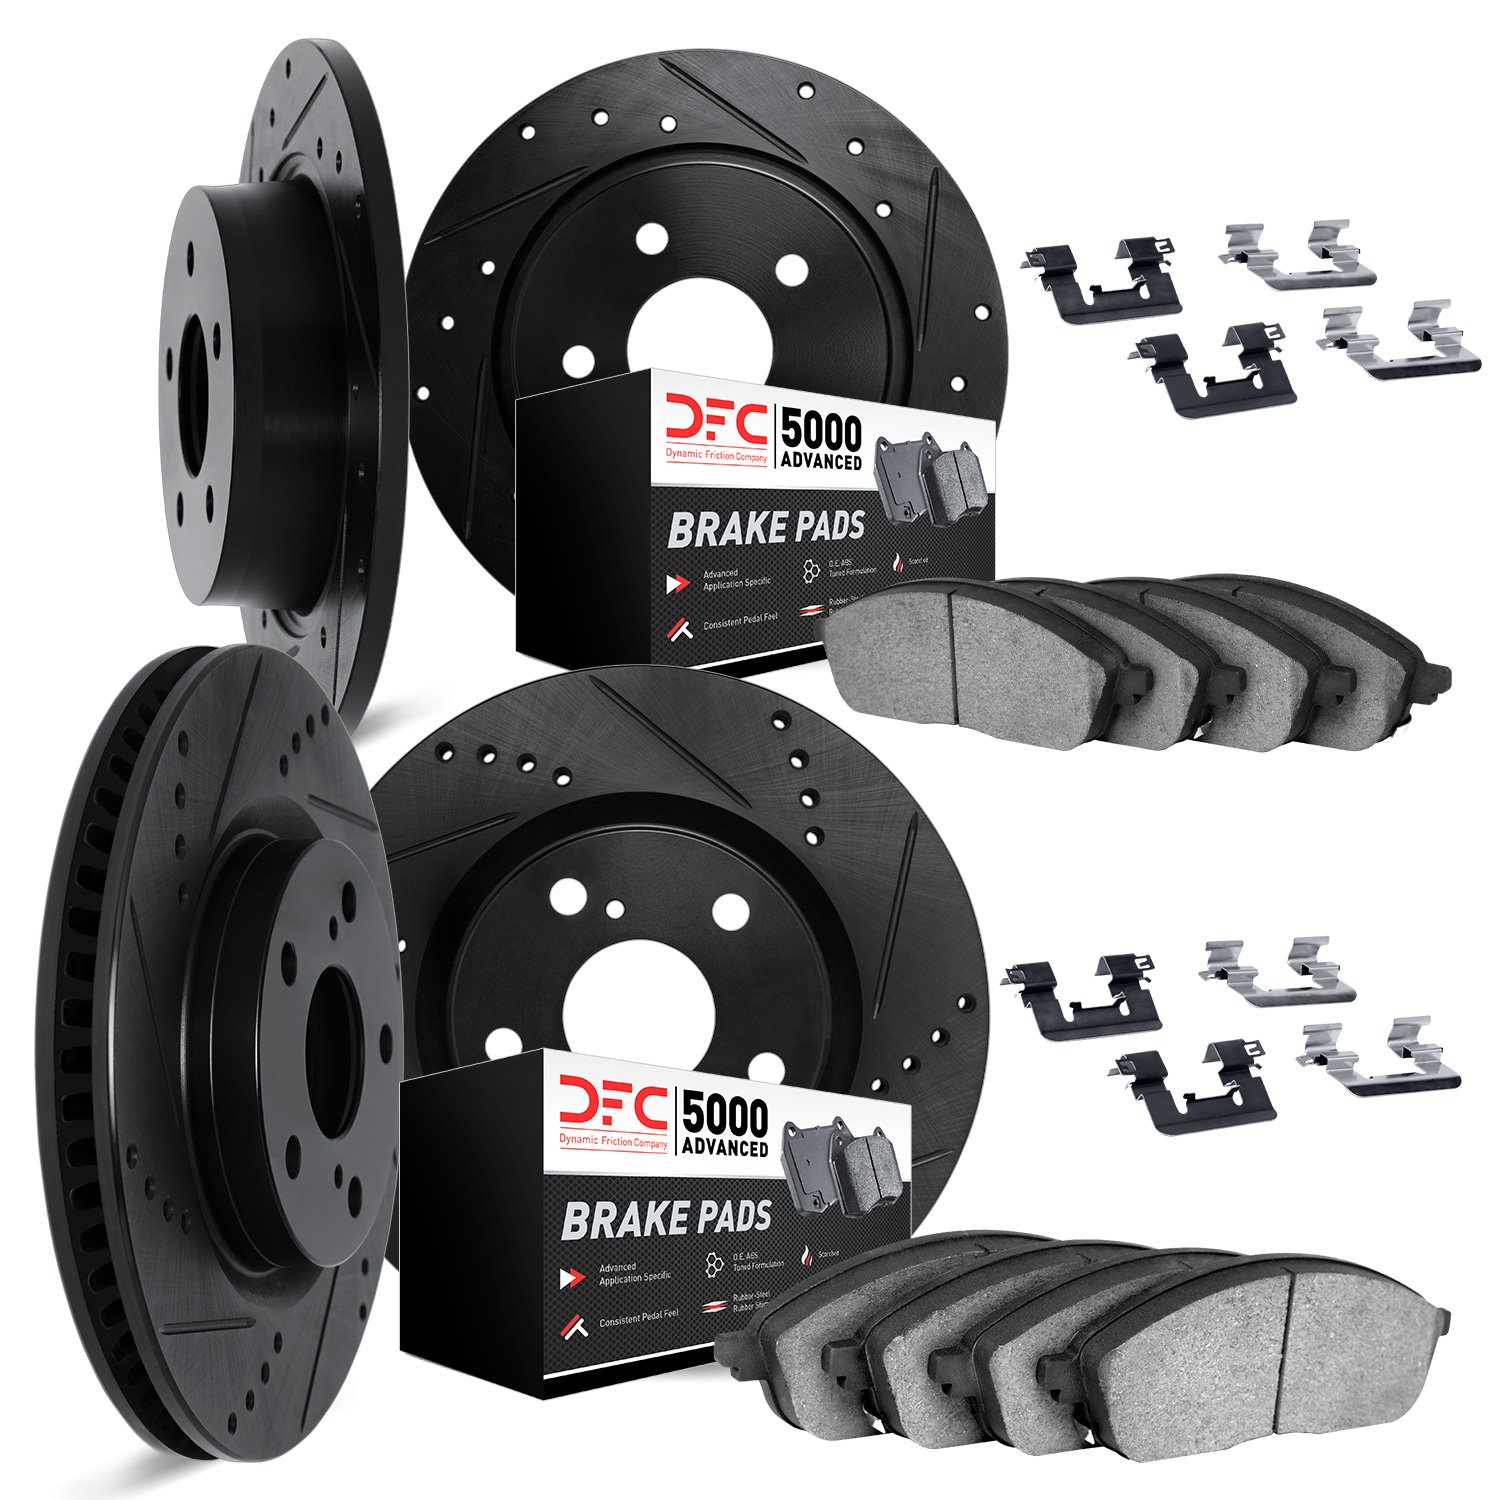 8514-39037 Drilled/Slotted Brake Rotors w/5000 Advanced Brake Pads Kit & Hardware [Black], 2013-2016 Mopar, Position: Front and